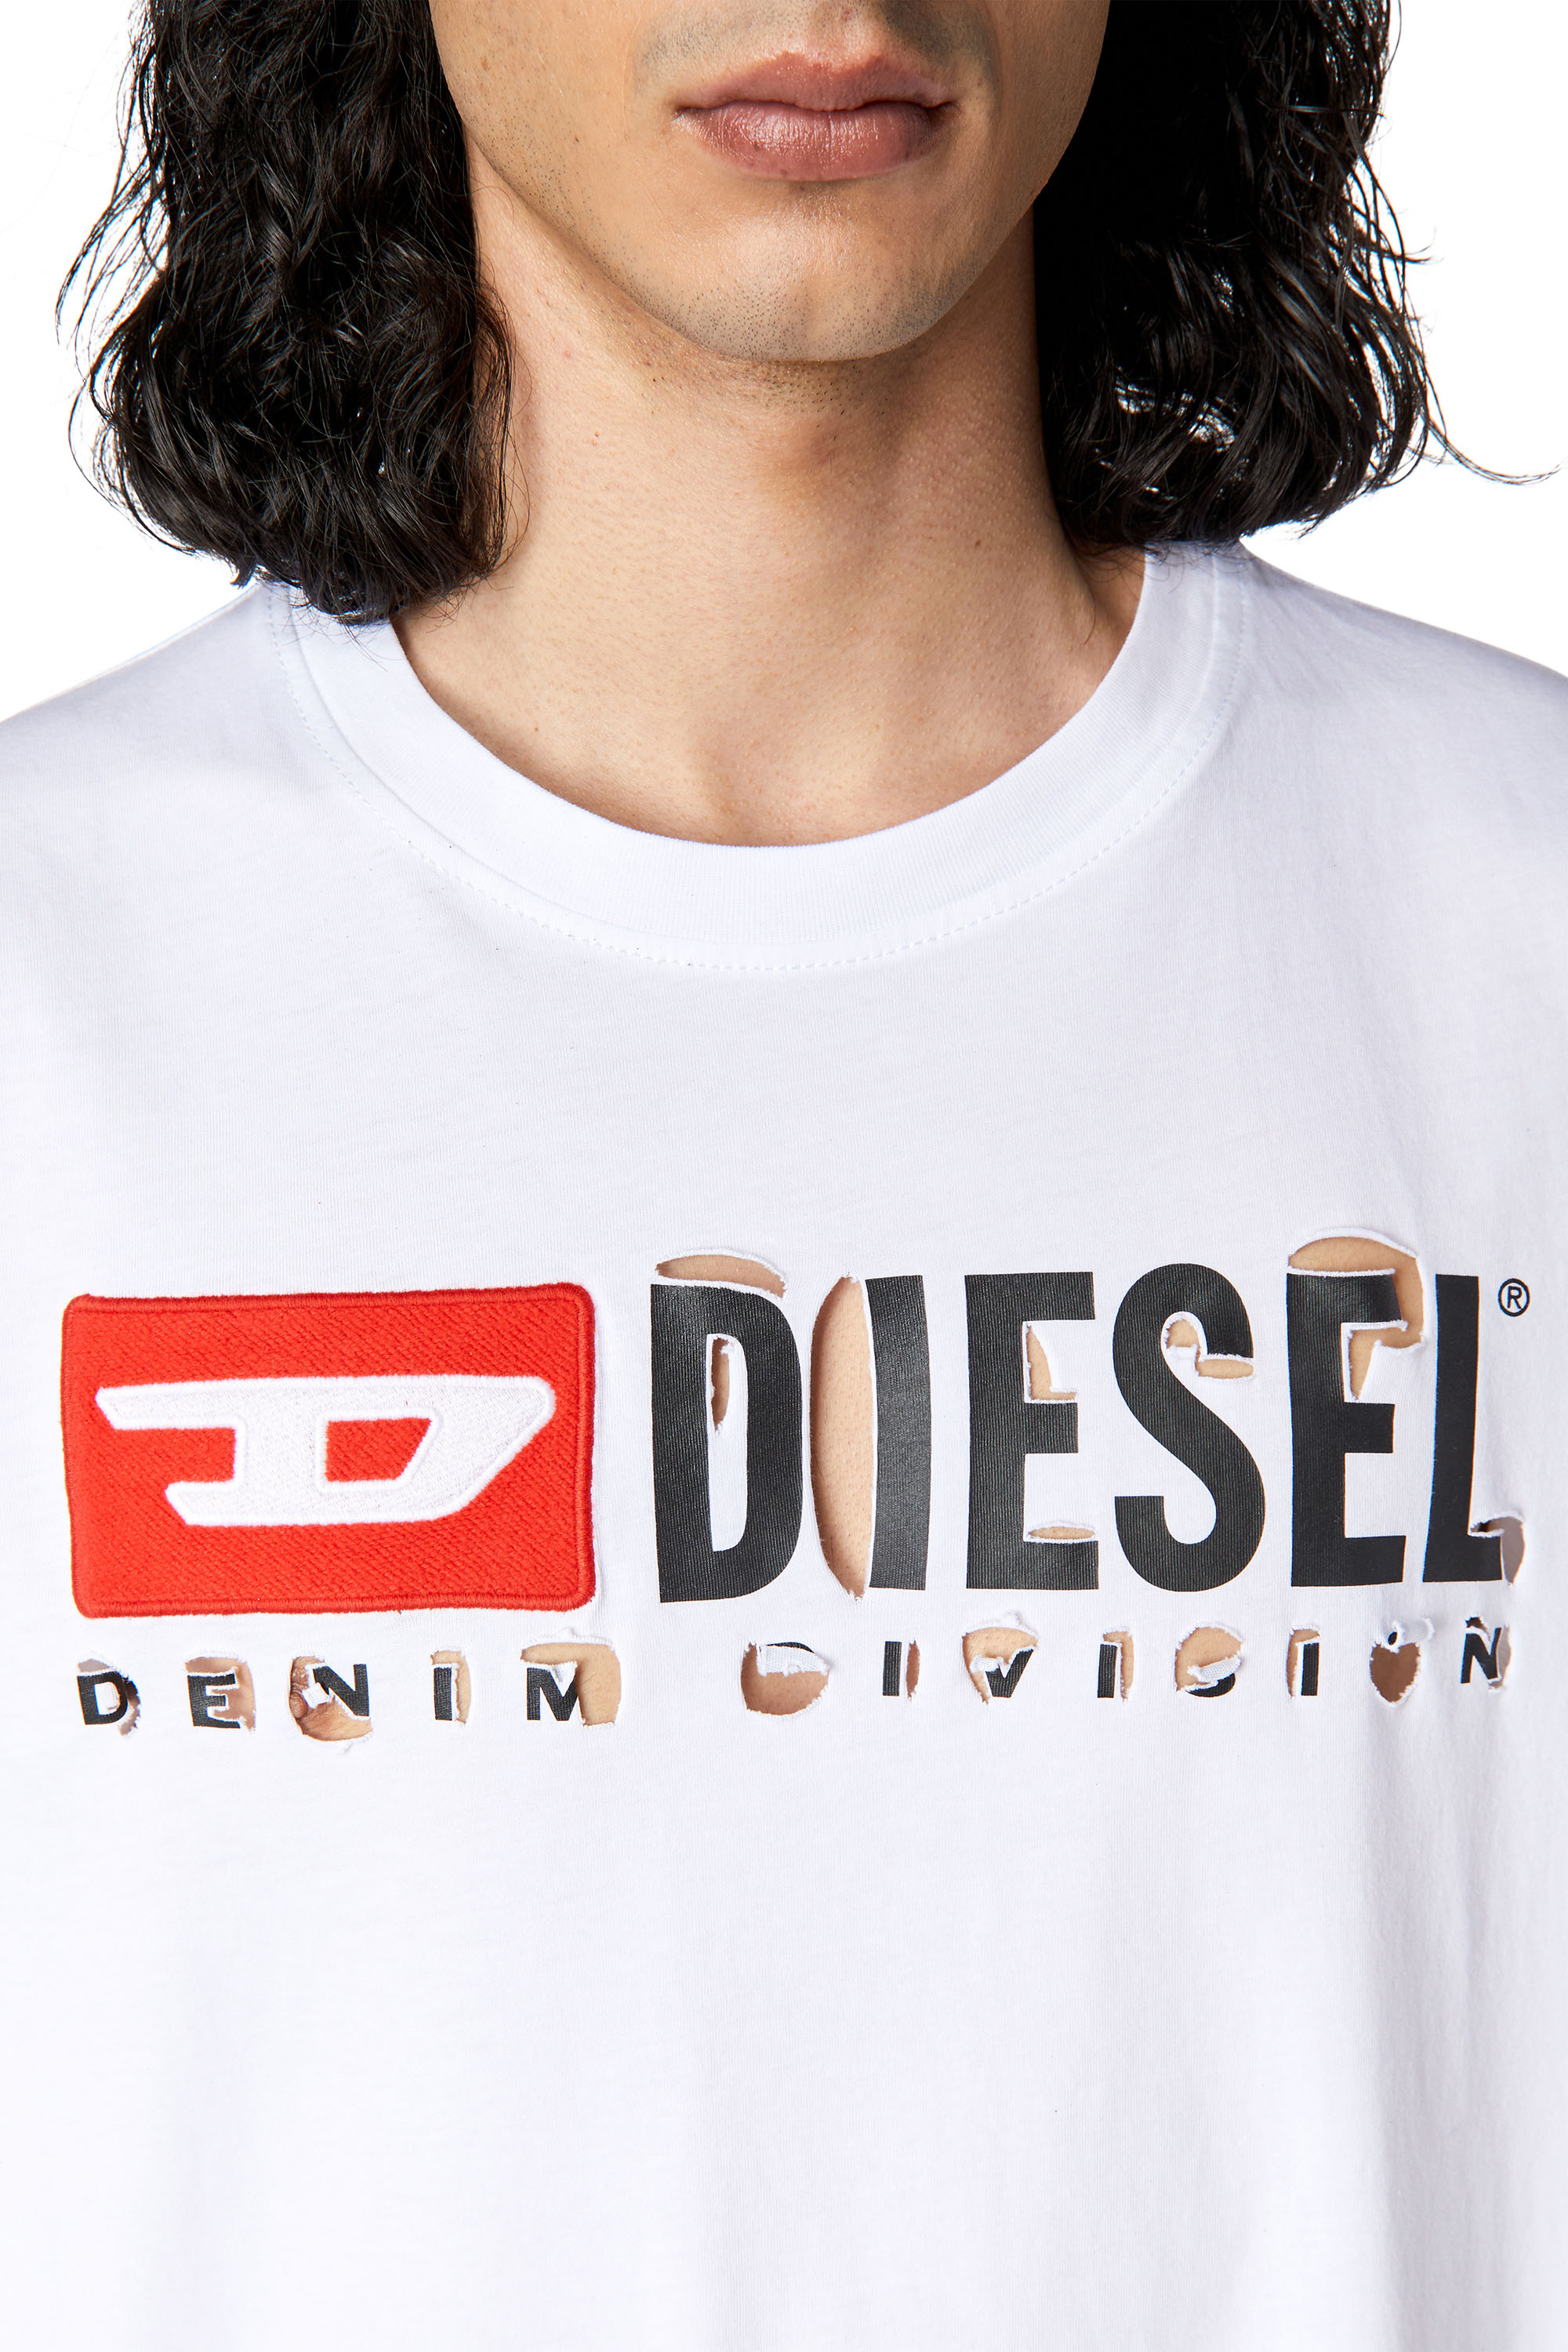 Diesel - T-JUST-DIVSTROYED, Weiß - Image 3